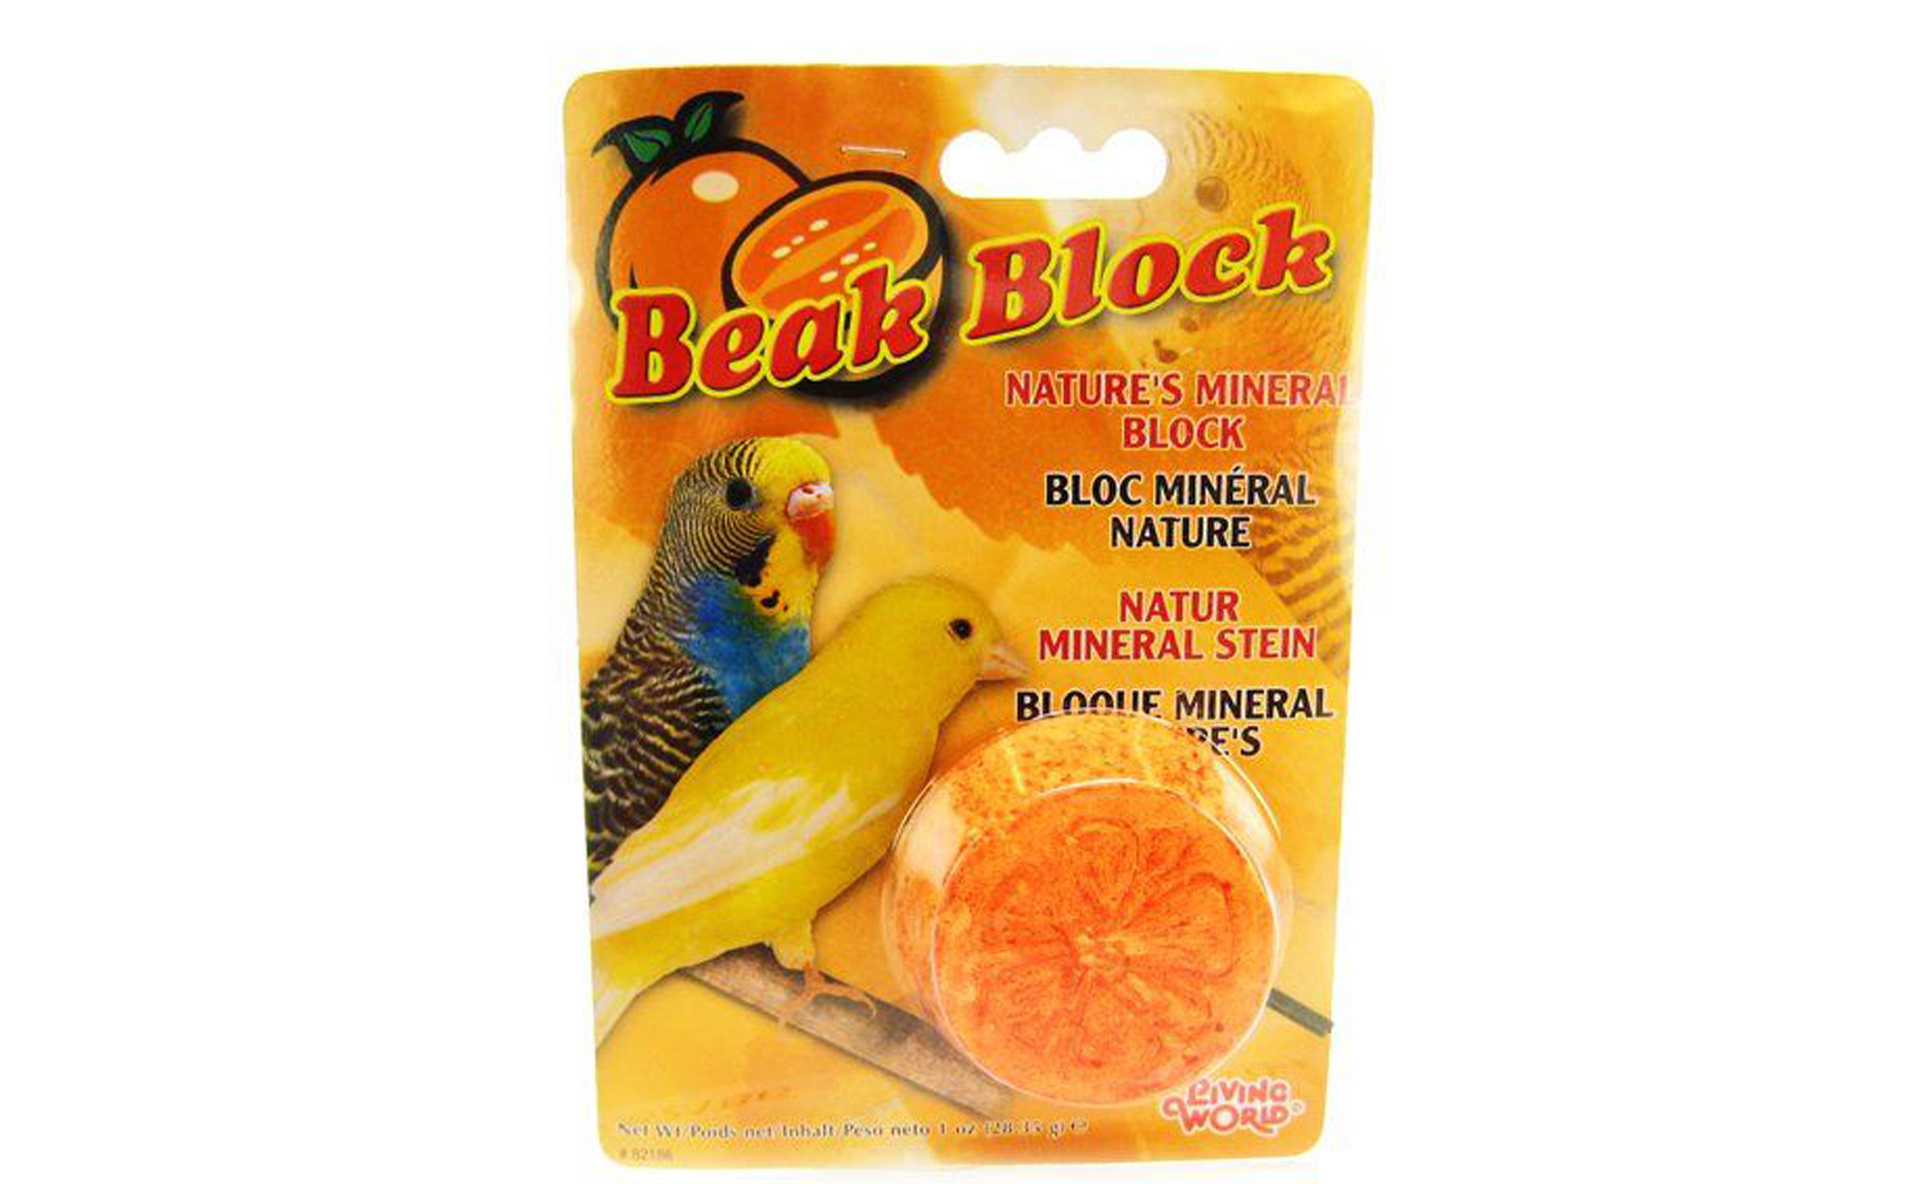 Beak Block - Nature's Minerals